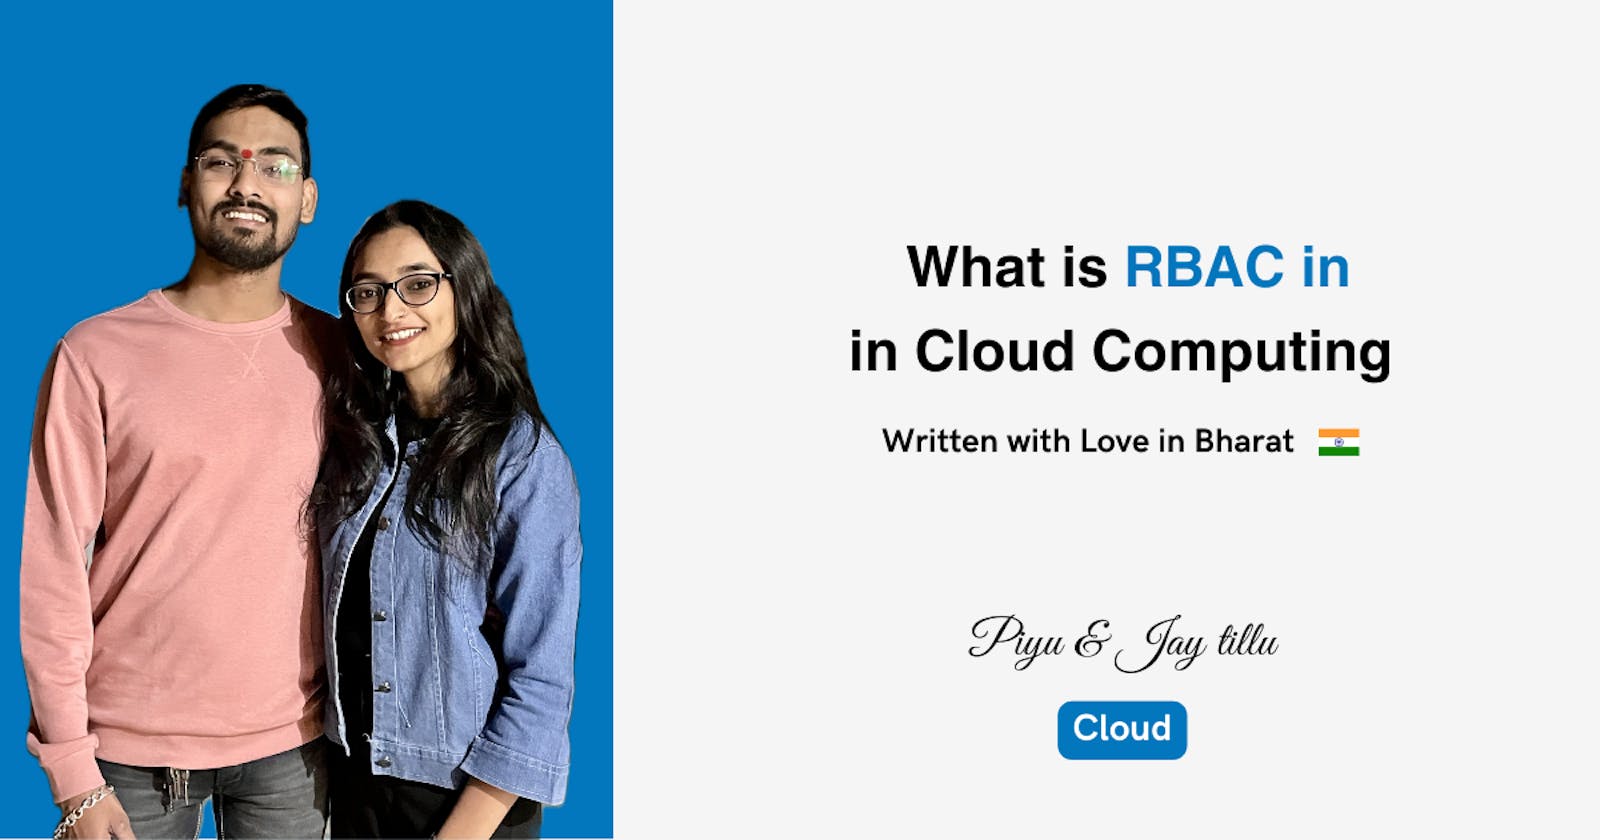 What is RBAC in Cloud Computing?